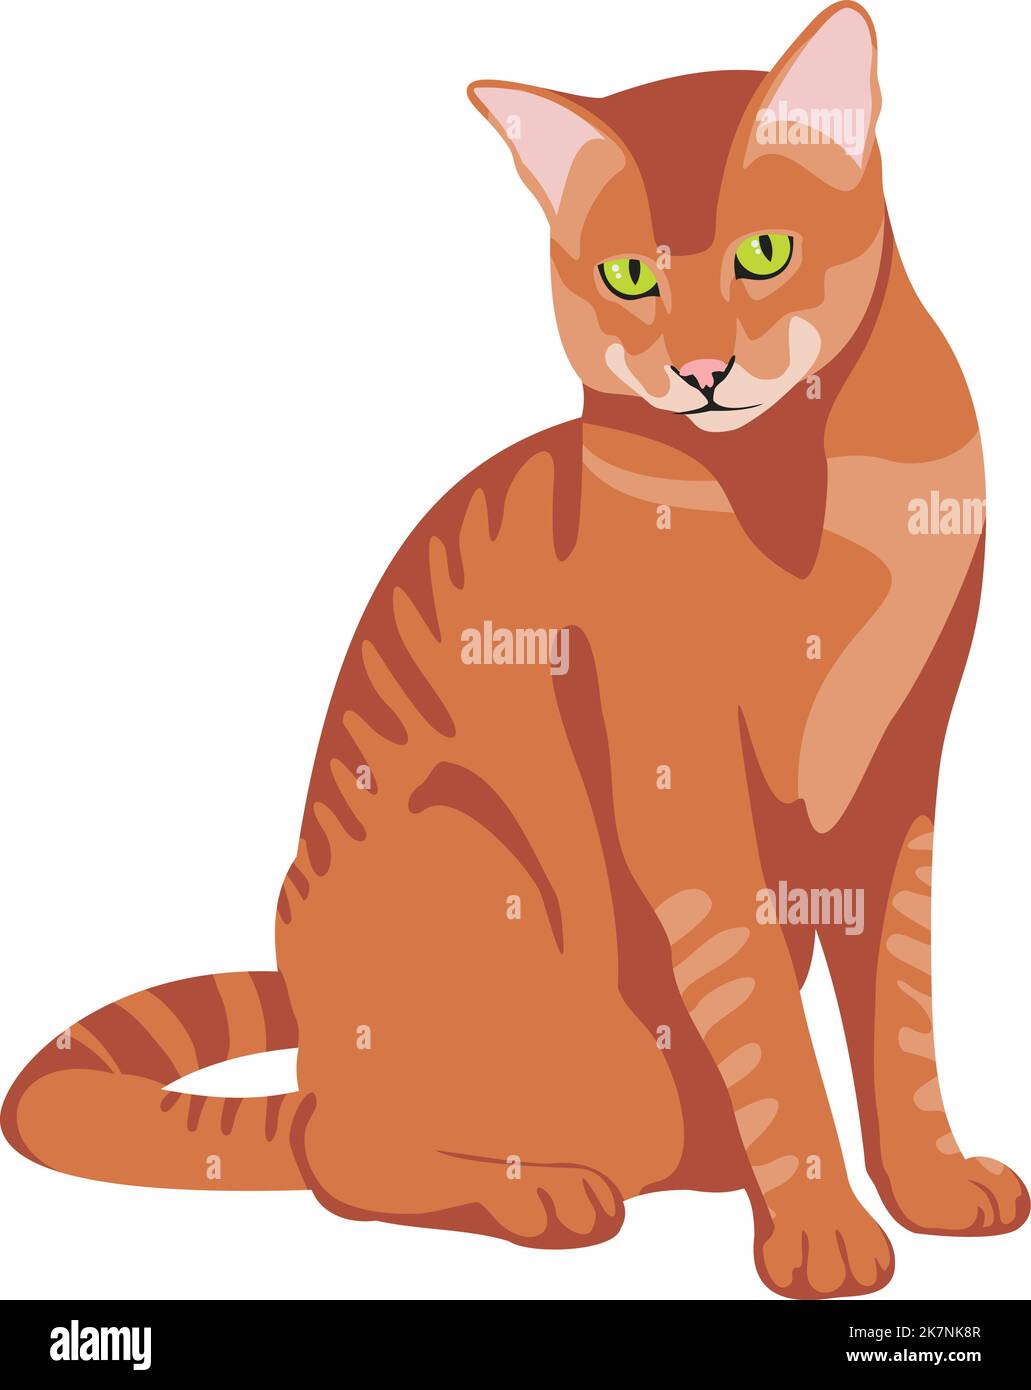 Red fur striped cat. Cartoon kitten icon Stock Vector